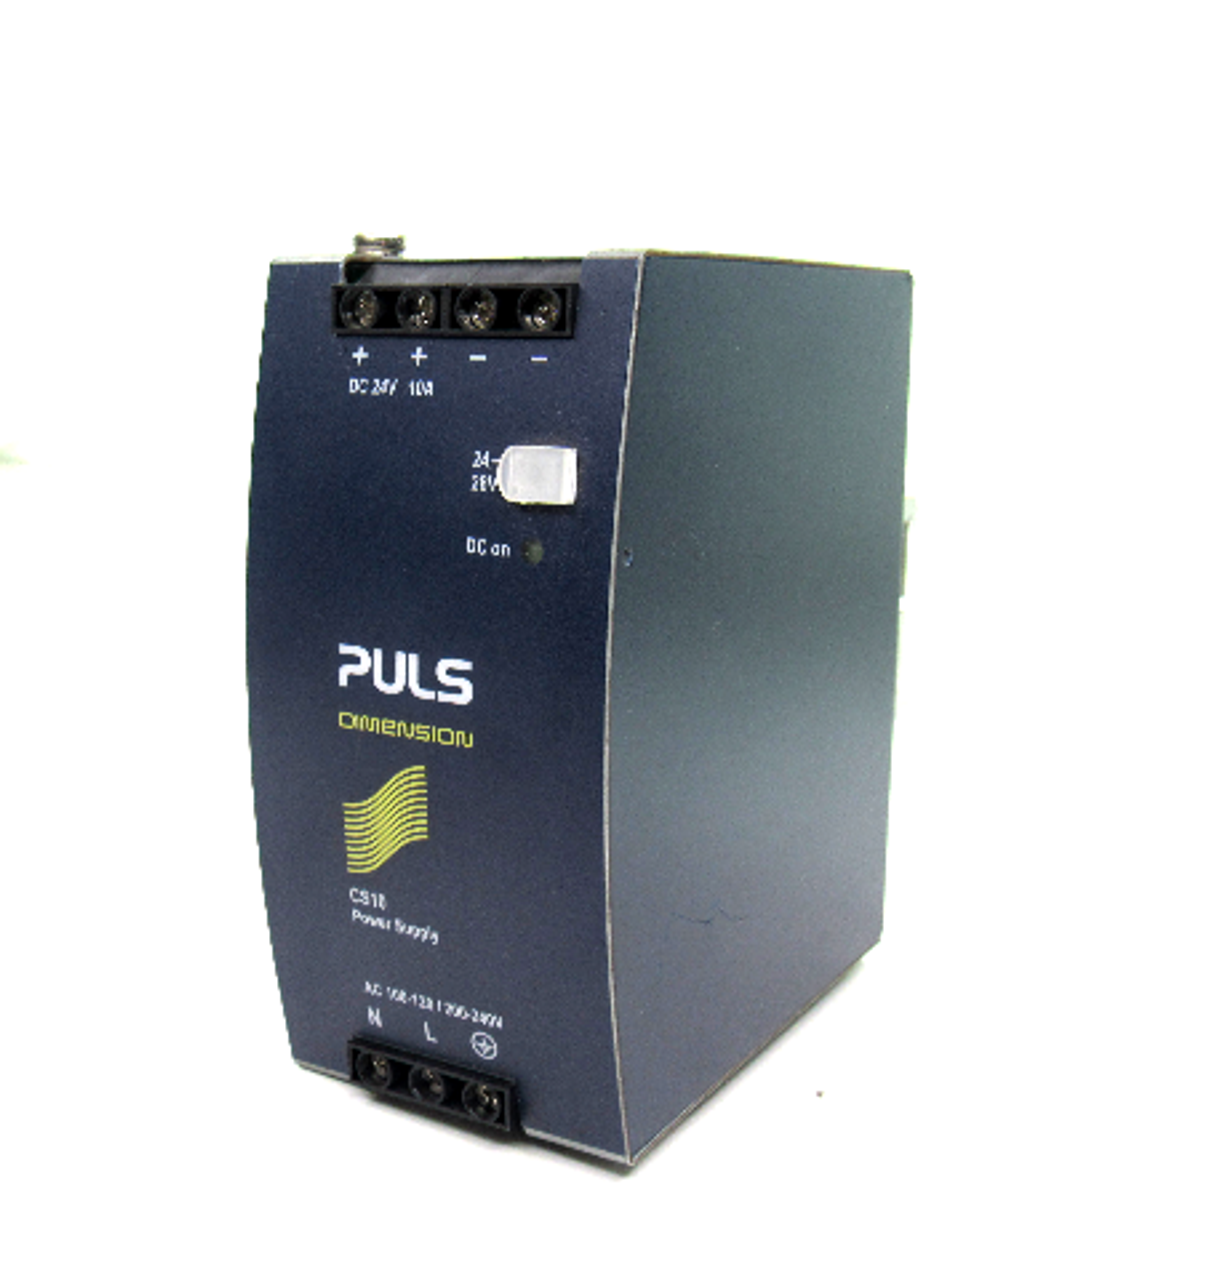 Puls Dimension CS10.241 DIN Rail Power Supply, 24V, 10A, 50/60 Hz